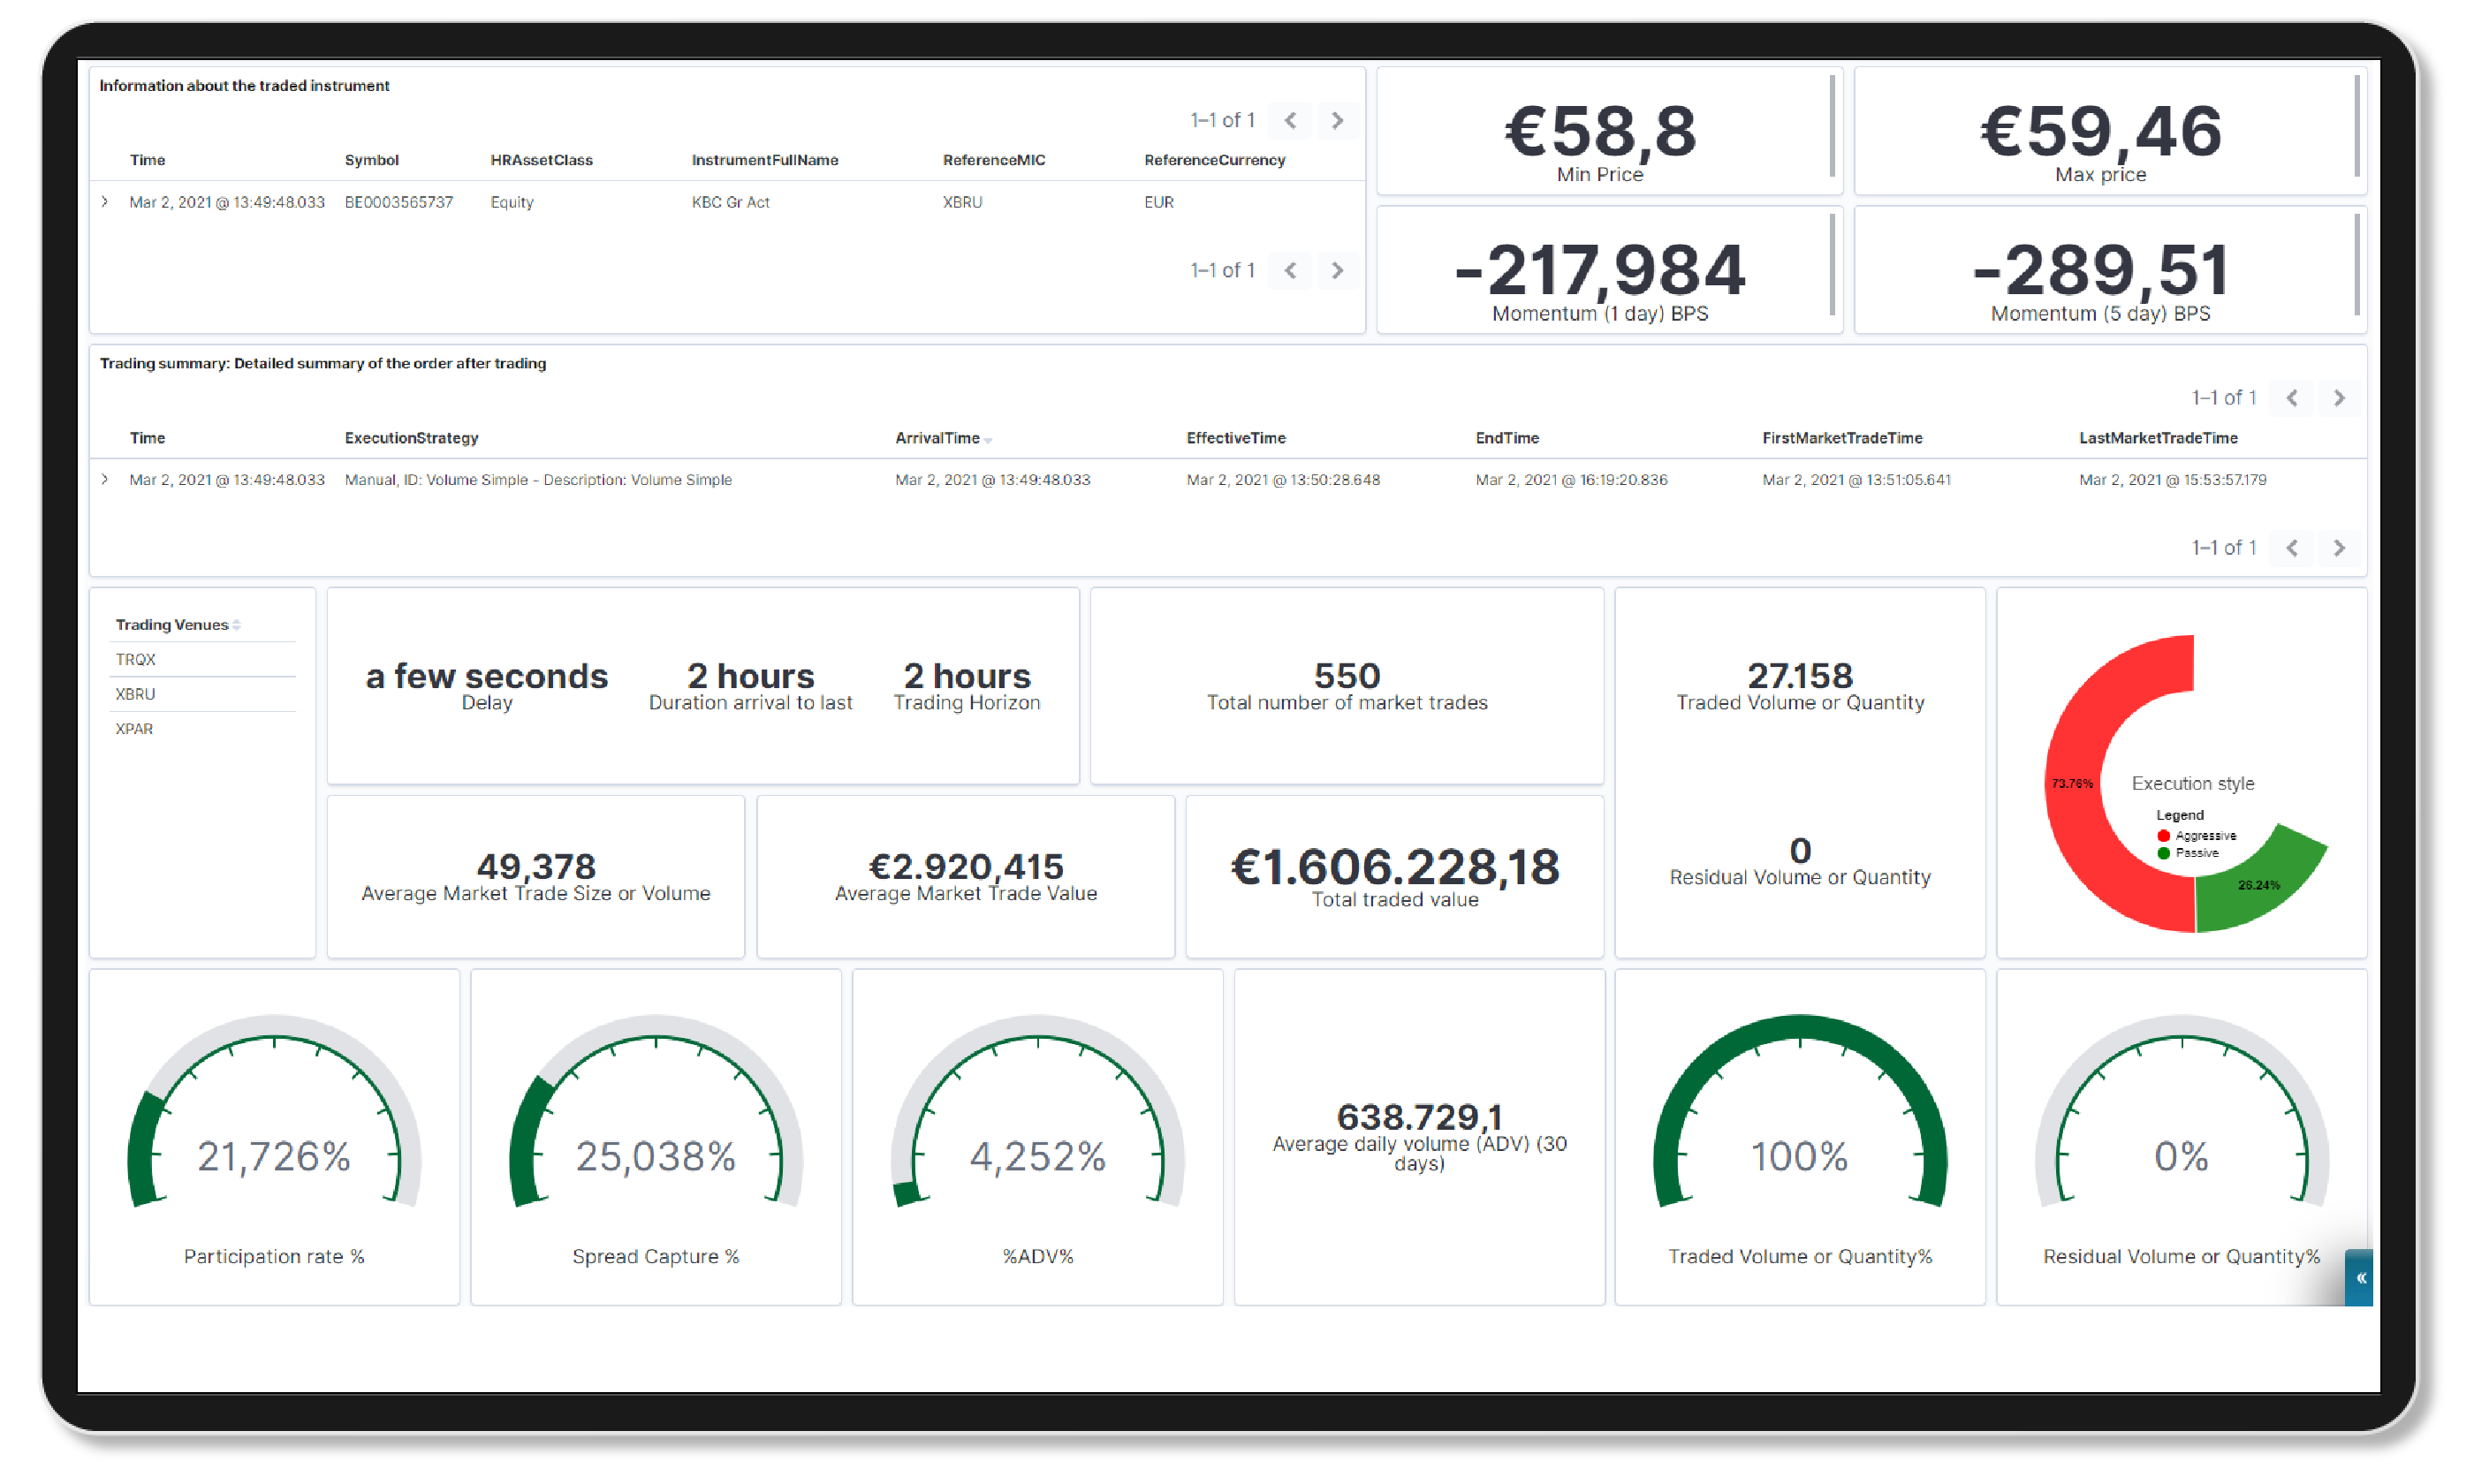 Fidessa Transaction Cost Analysis dashboard